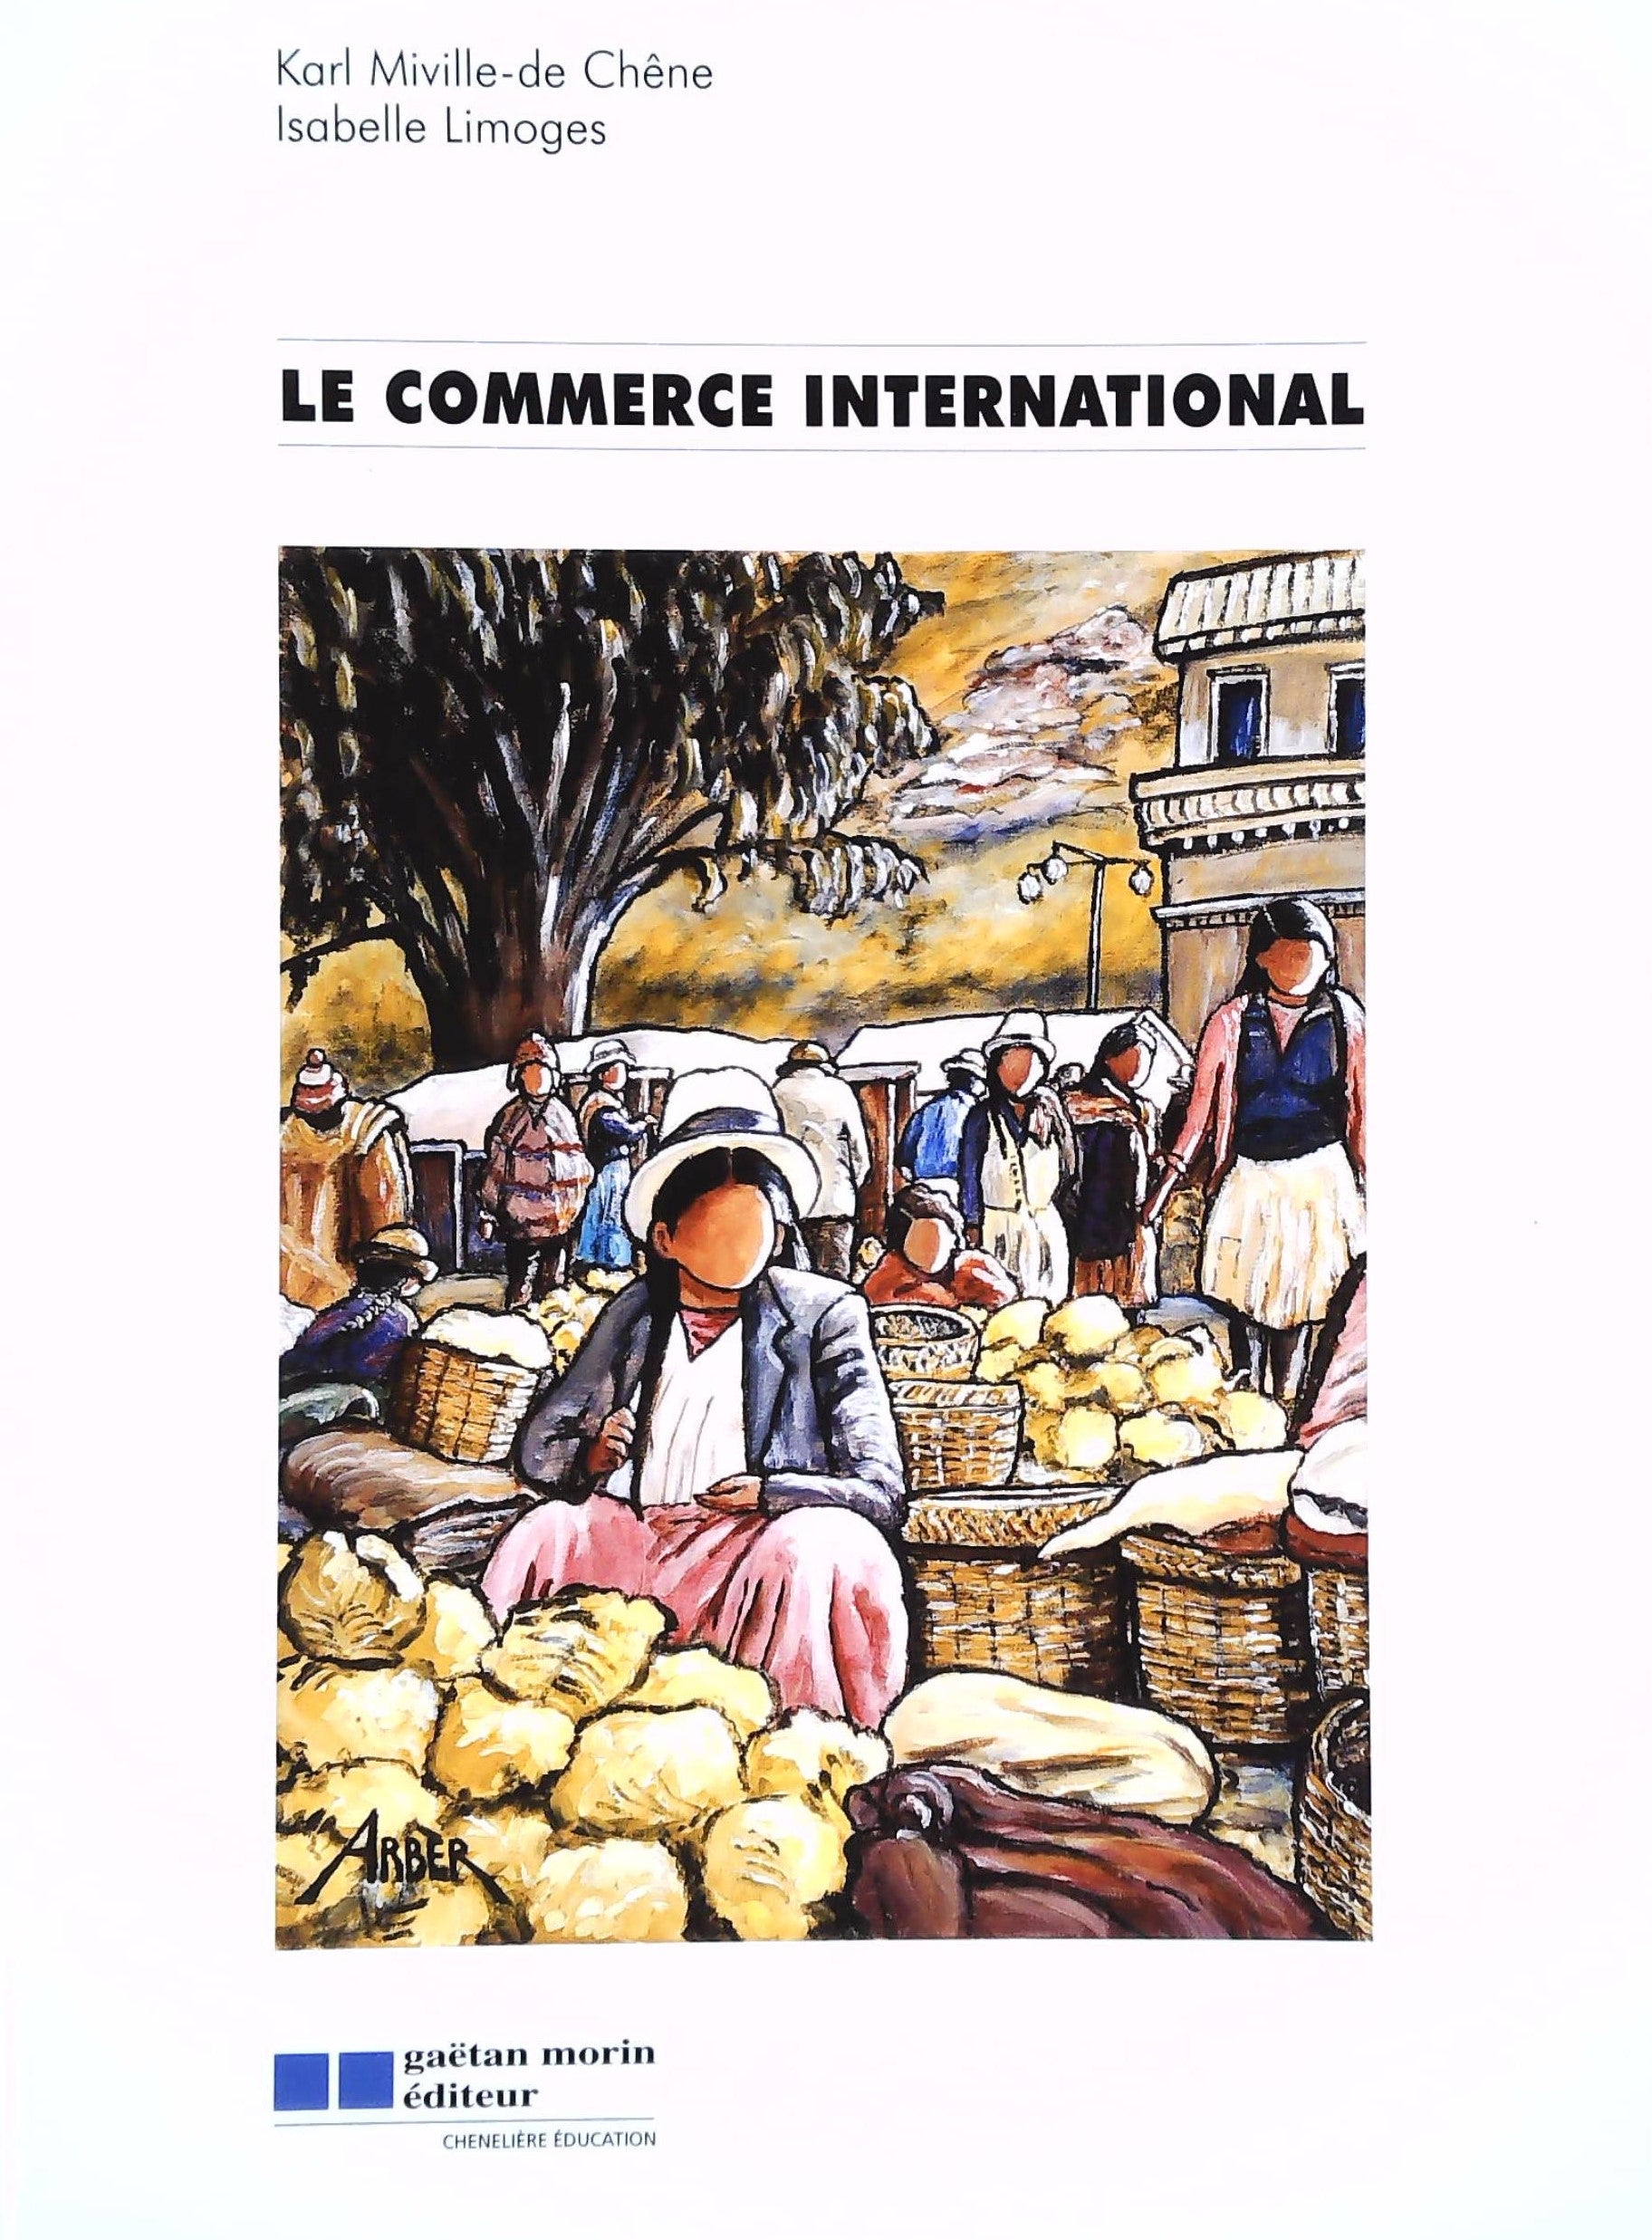 Livre ISBN 2891059190 Le commerce international (Karl Miville-de Chêne)